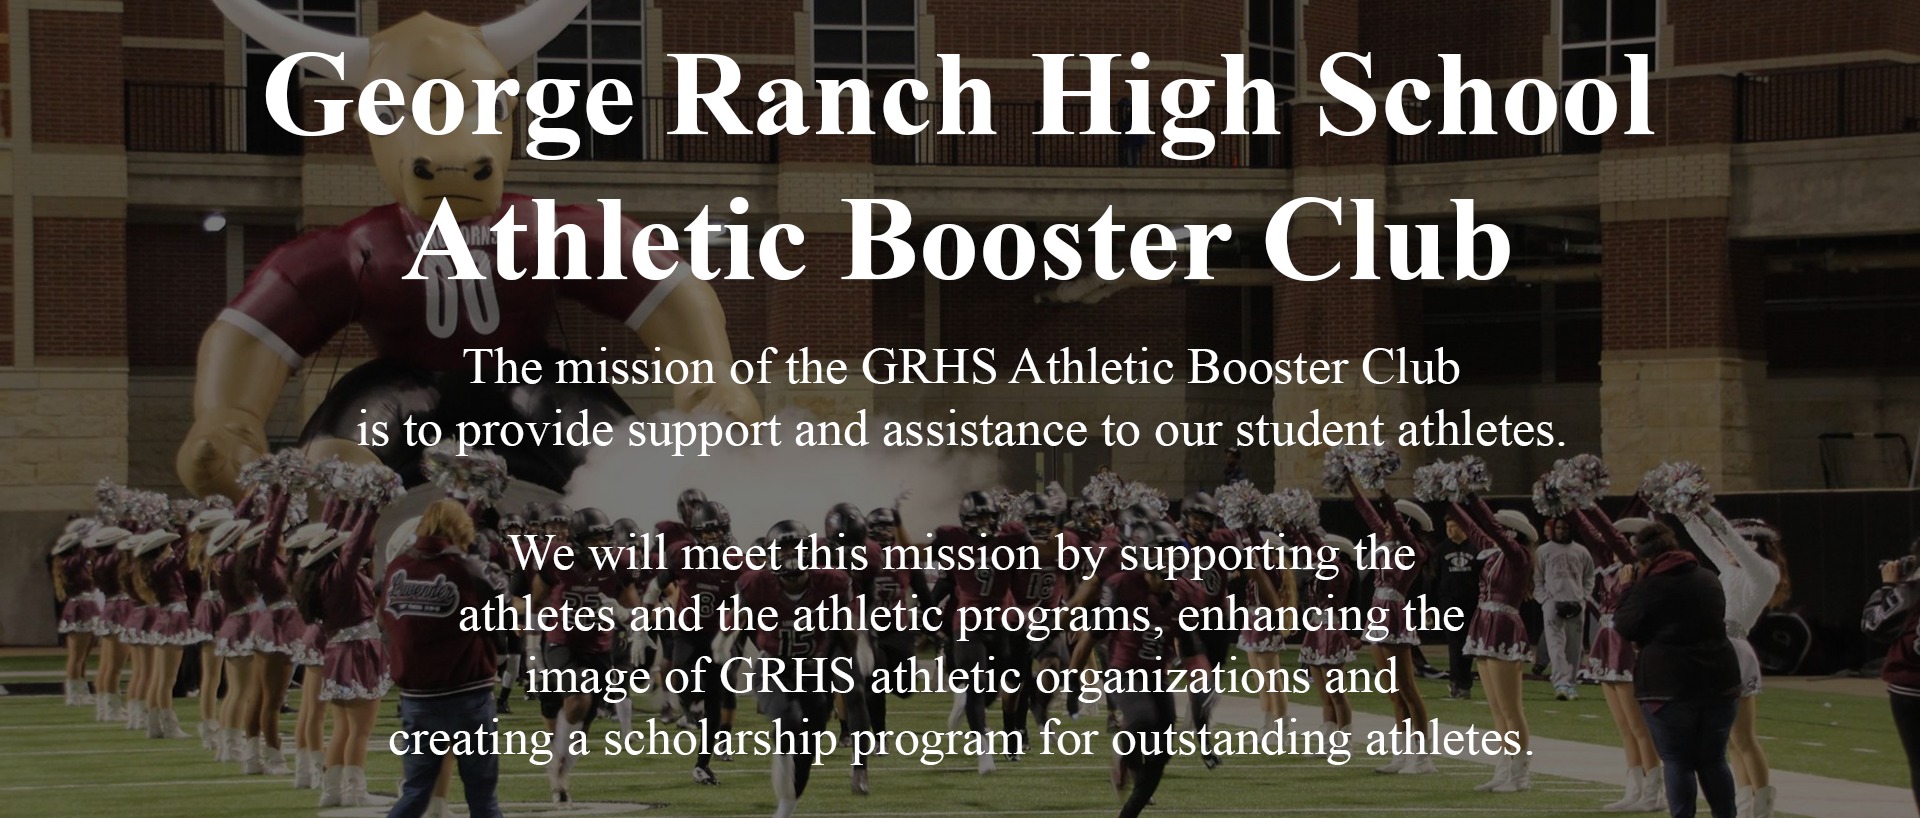 George Ranch High School ABC Header Image3